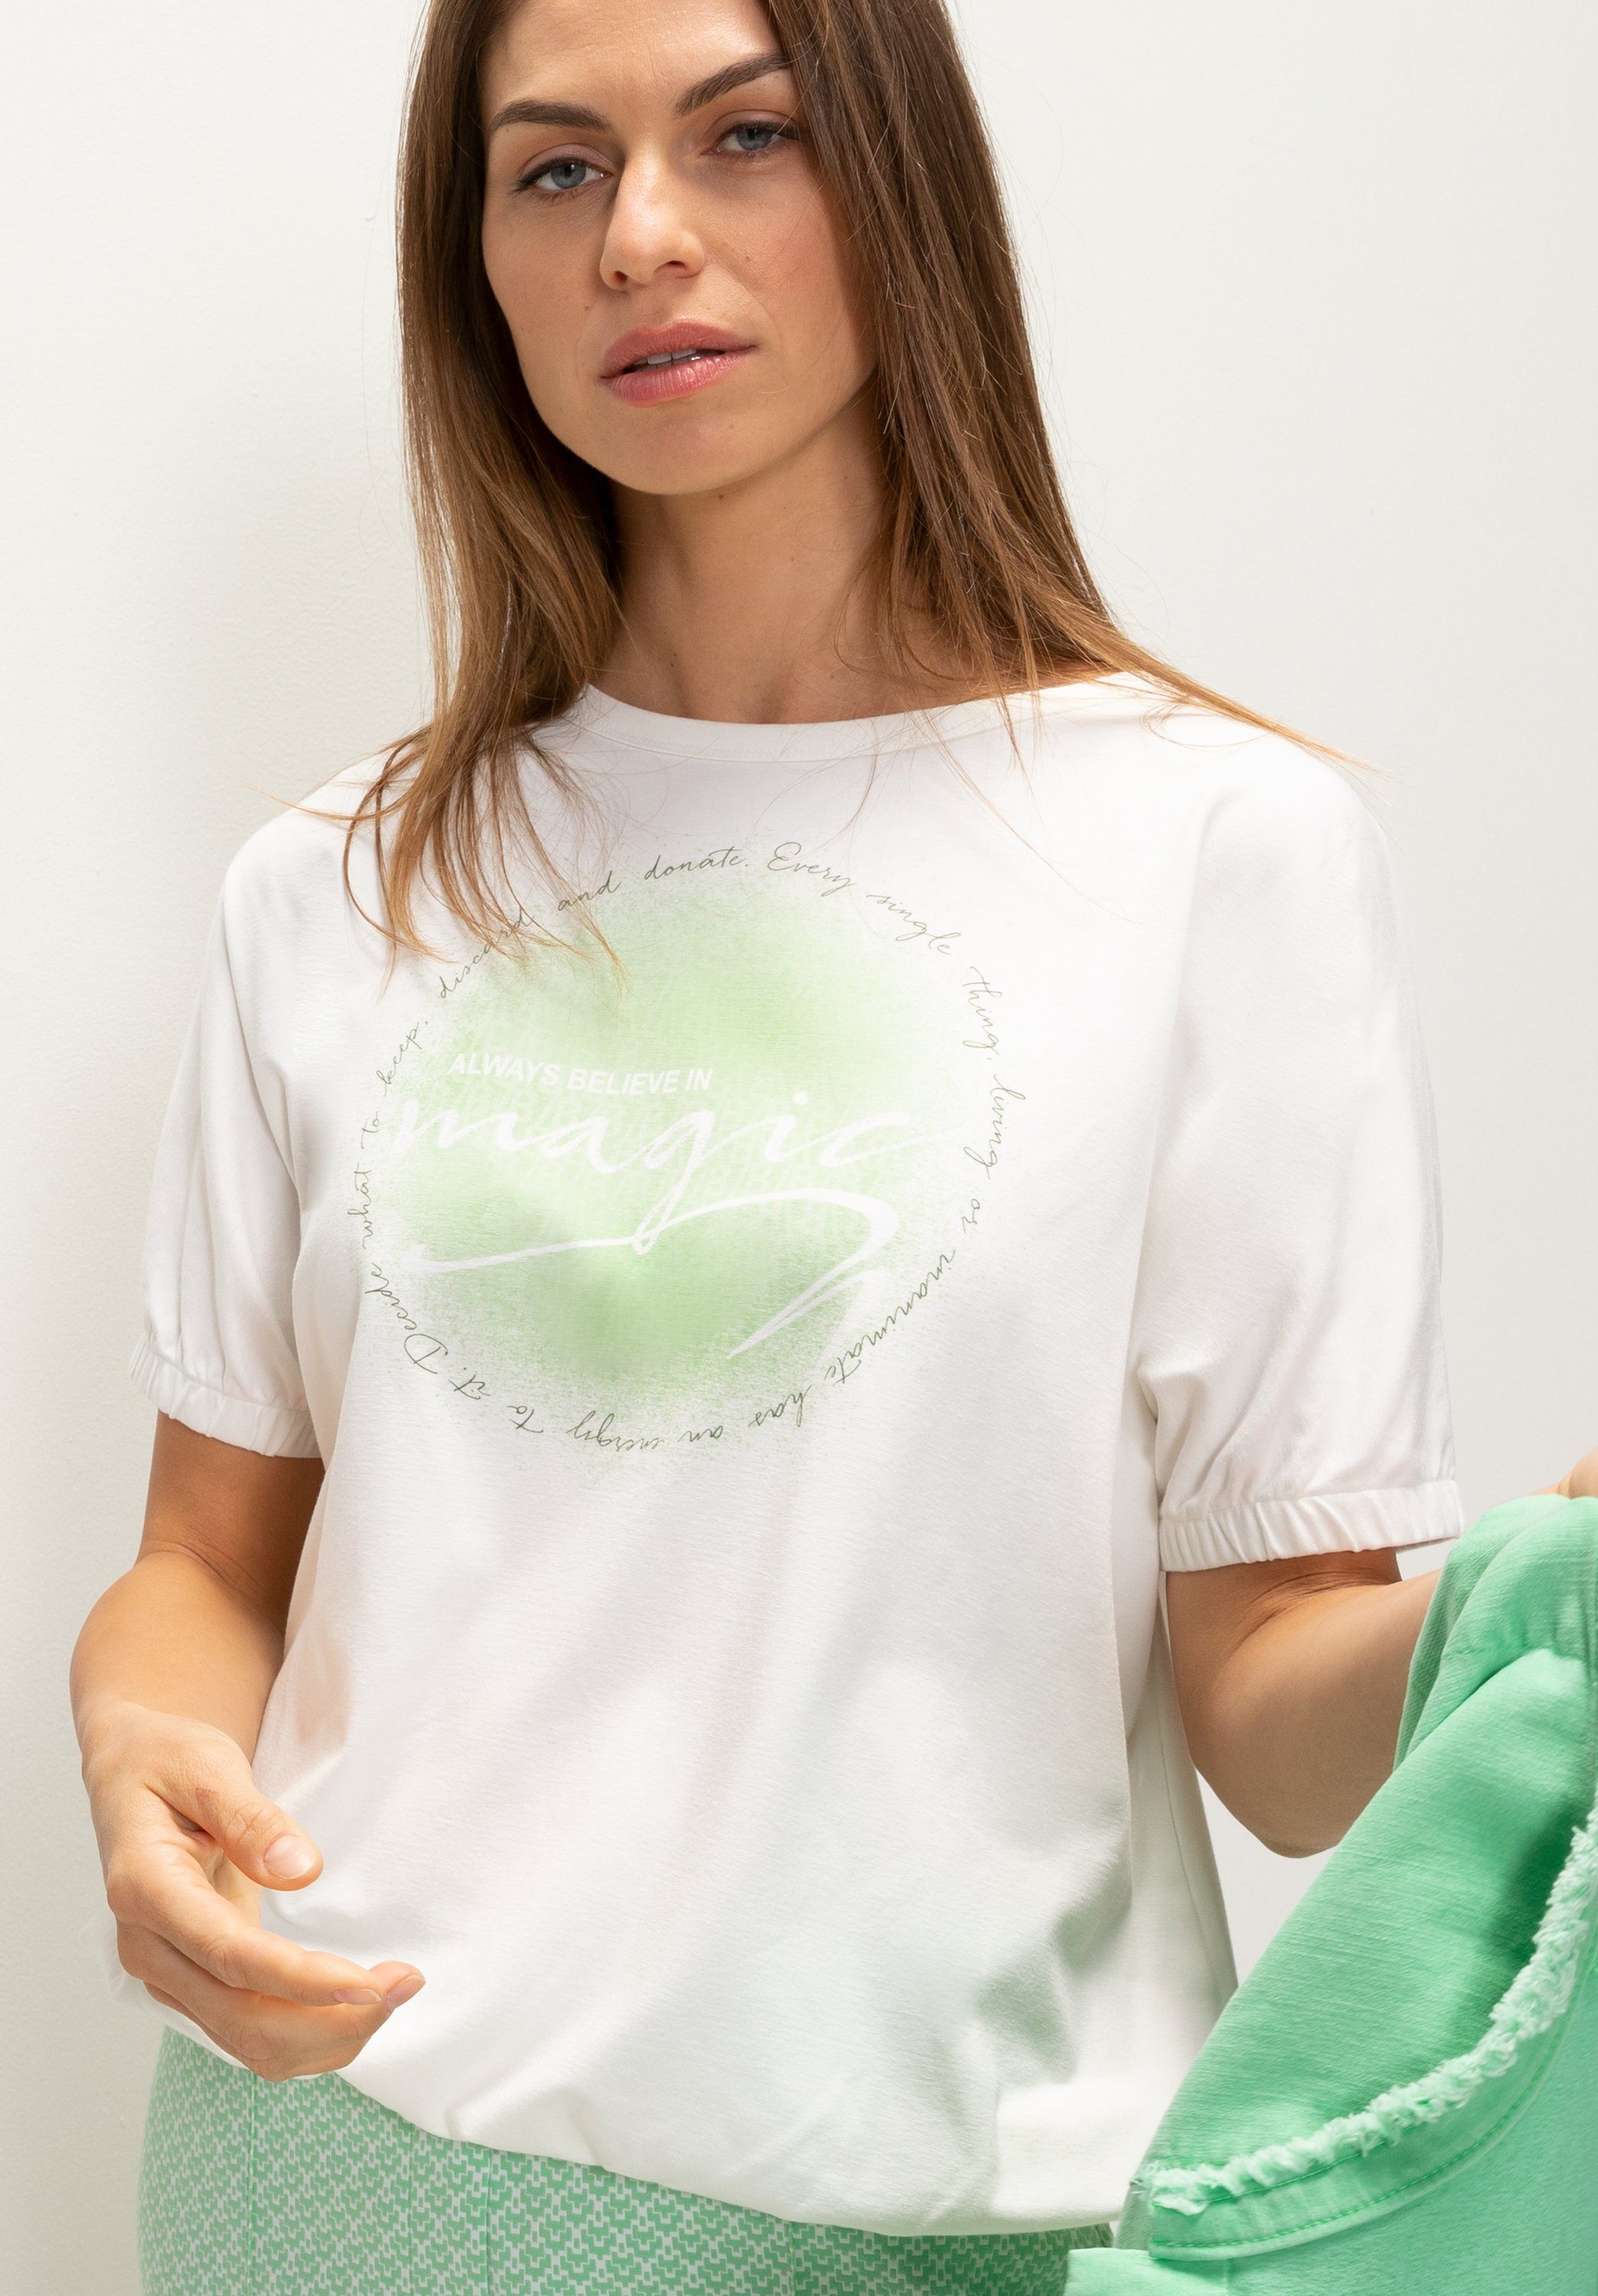 Print-Shirt Wording CHRISTINA farbigem bianca coolem und mit Frontmotiv